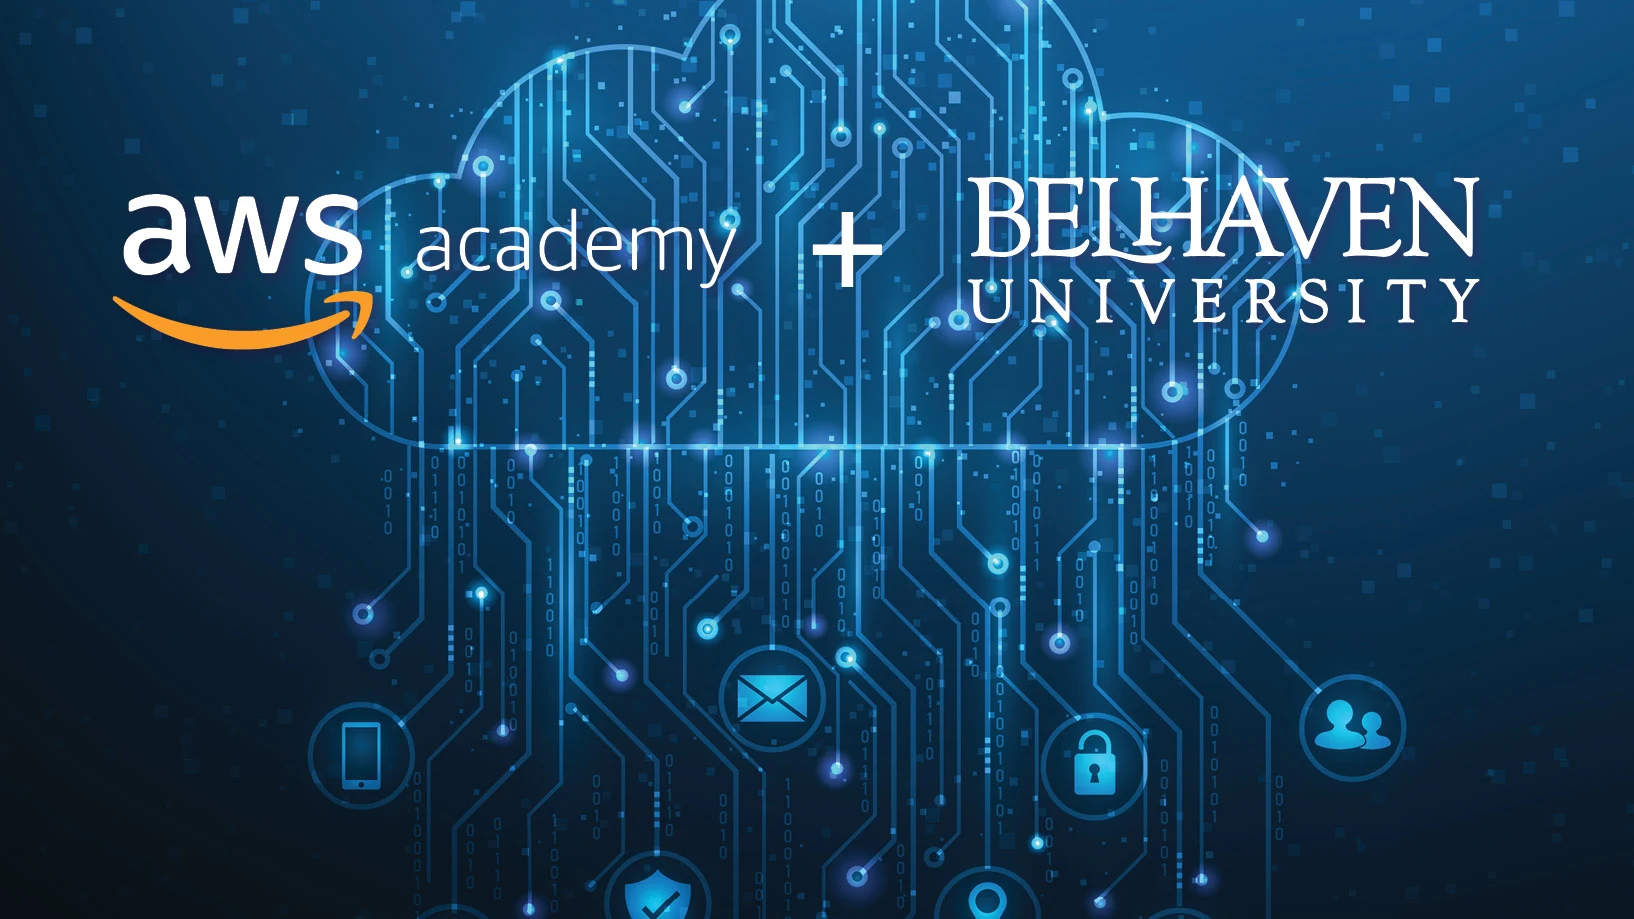 Belhaven University Joins AWS Academy